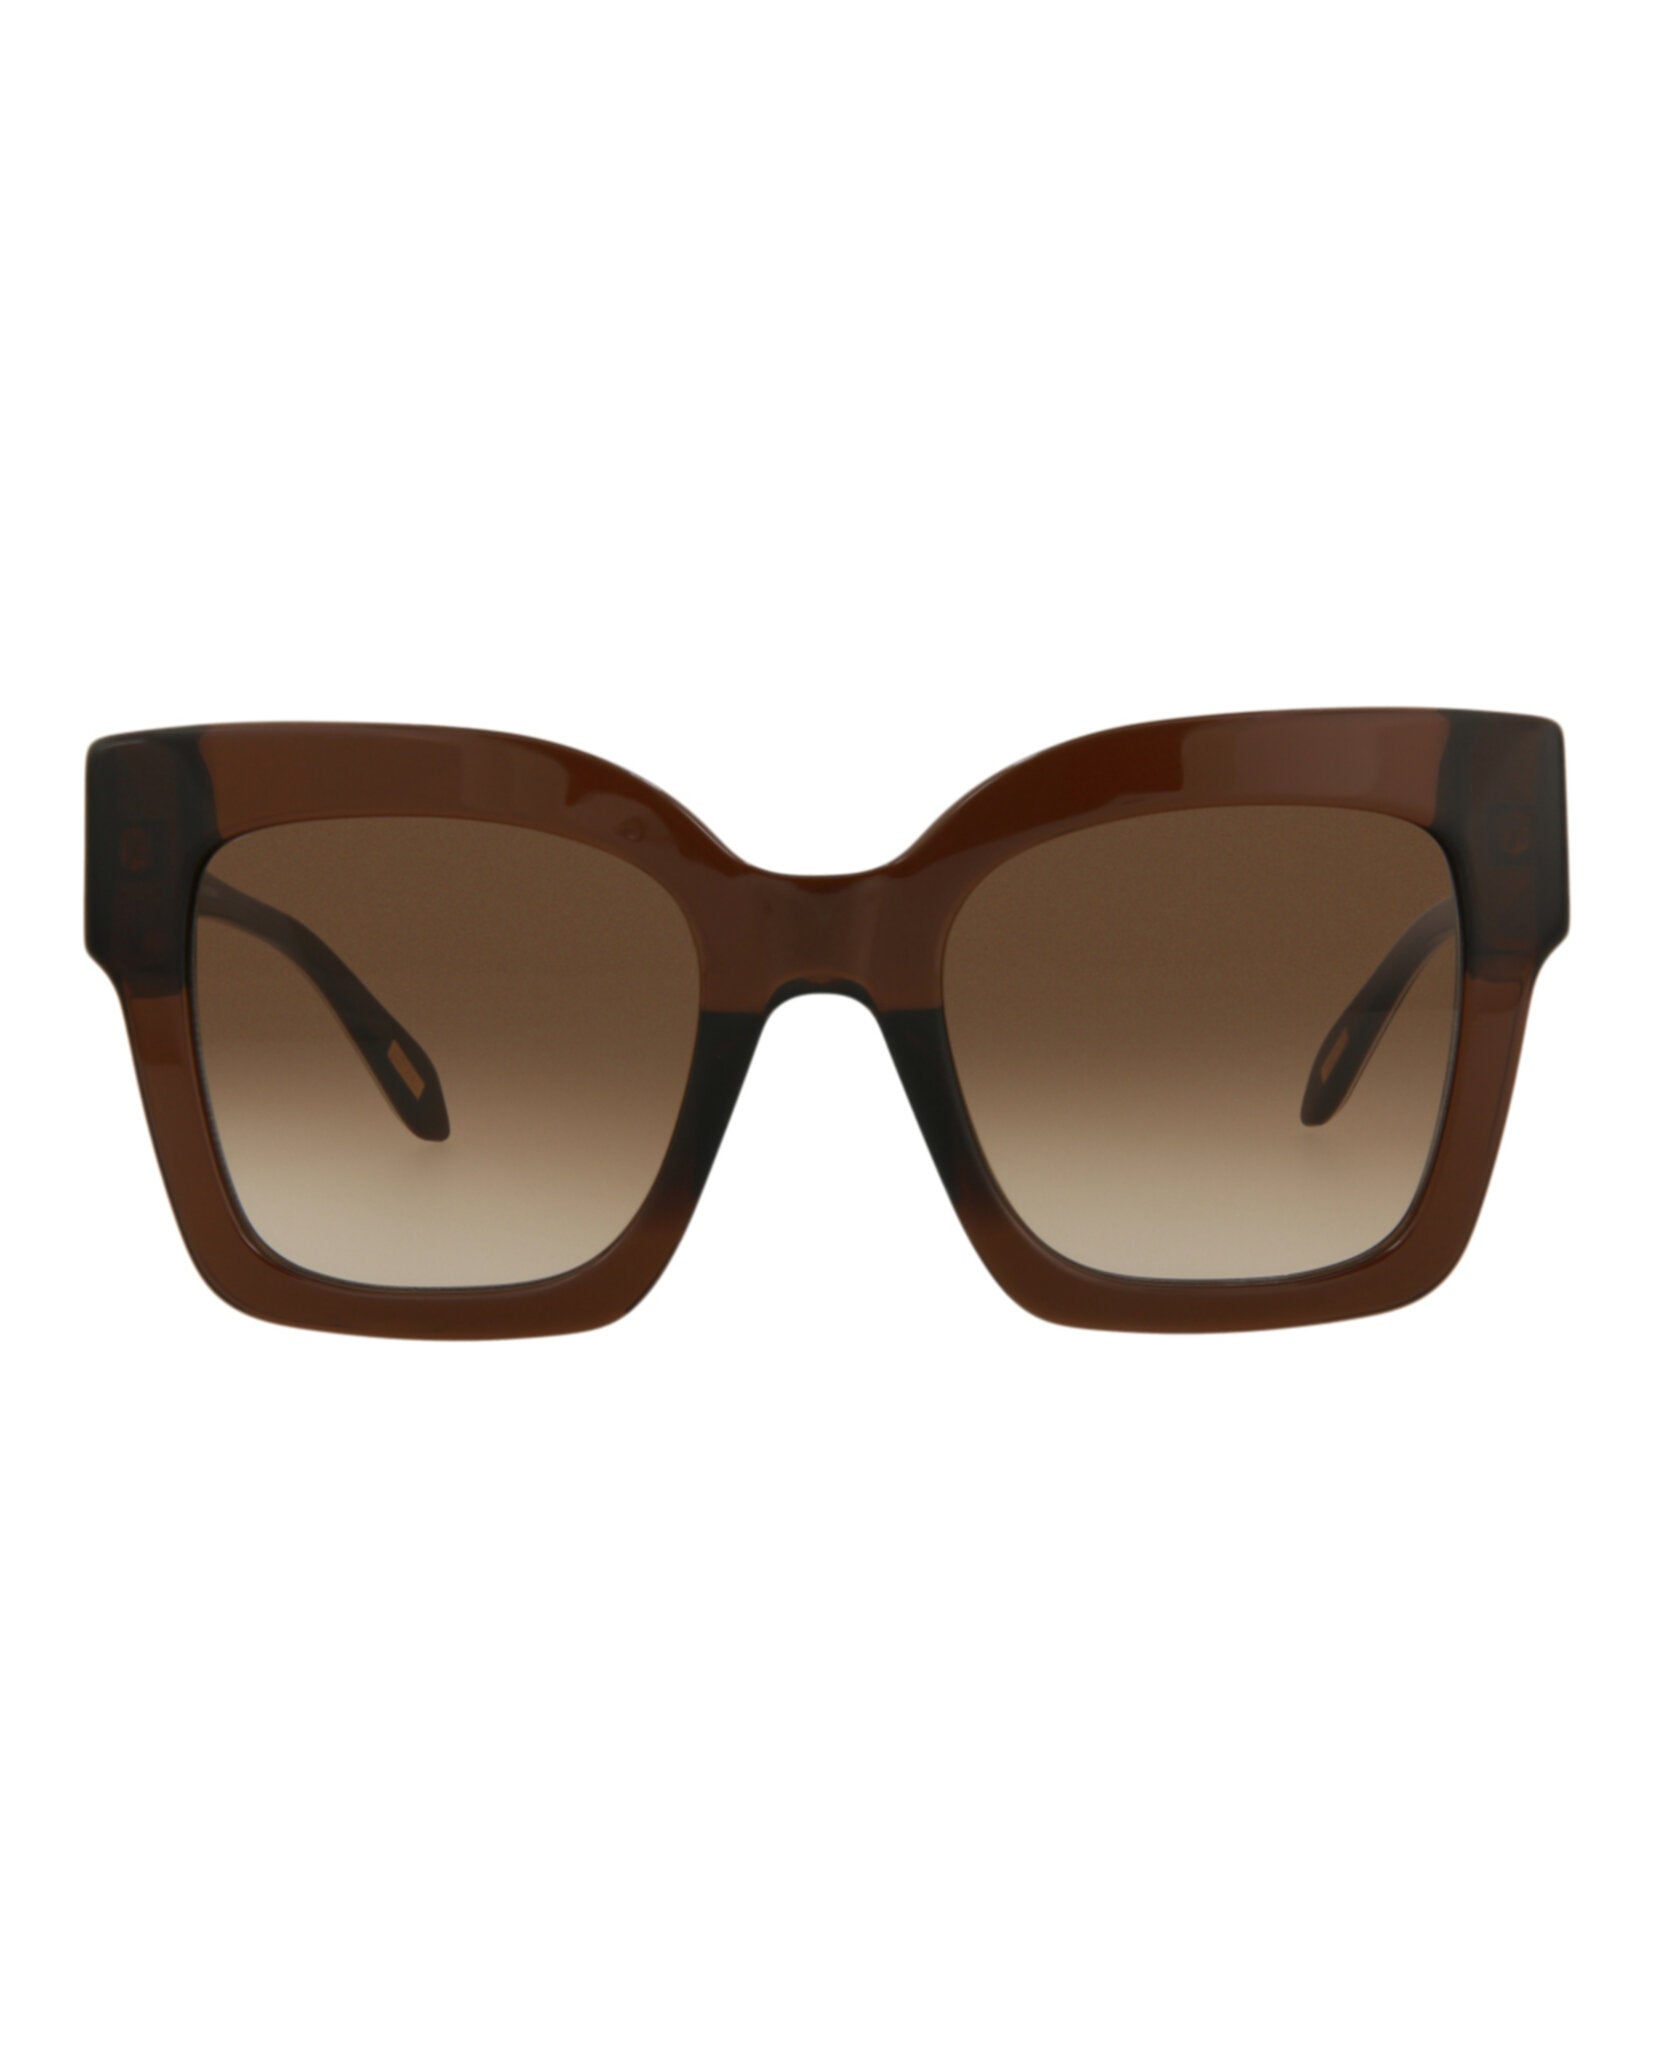 Just Cavalli Core Sunglasses Style # SJC019K– Ruumur